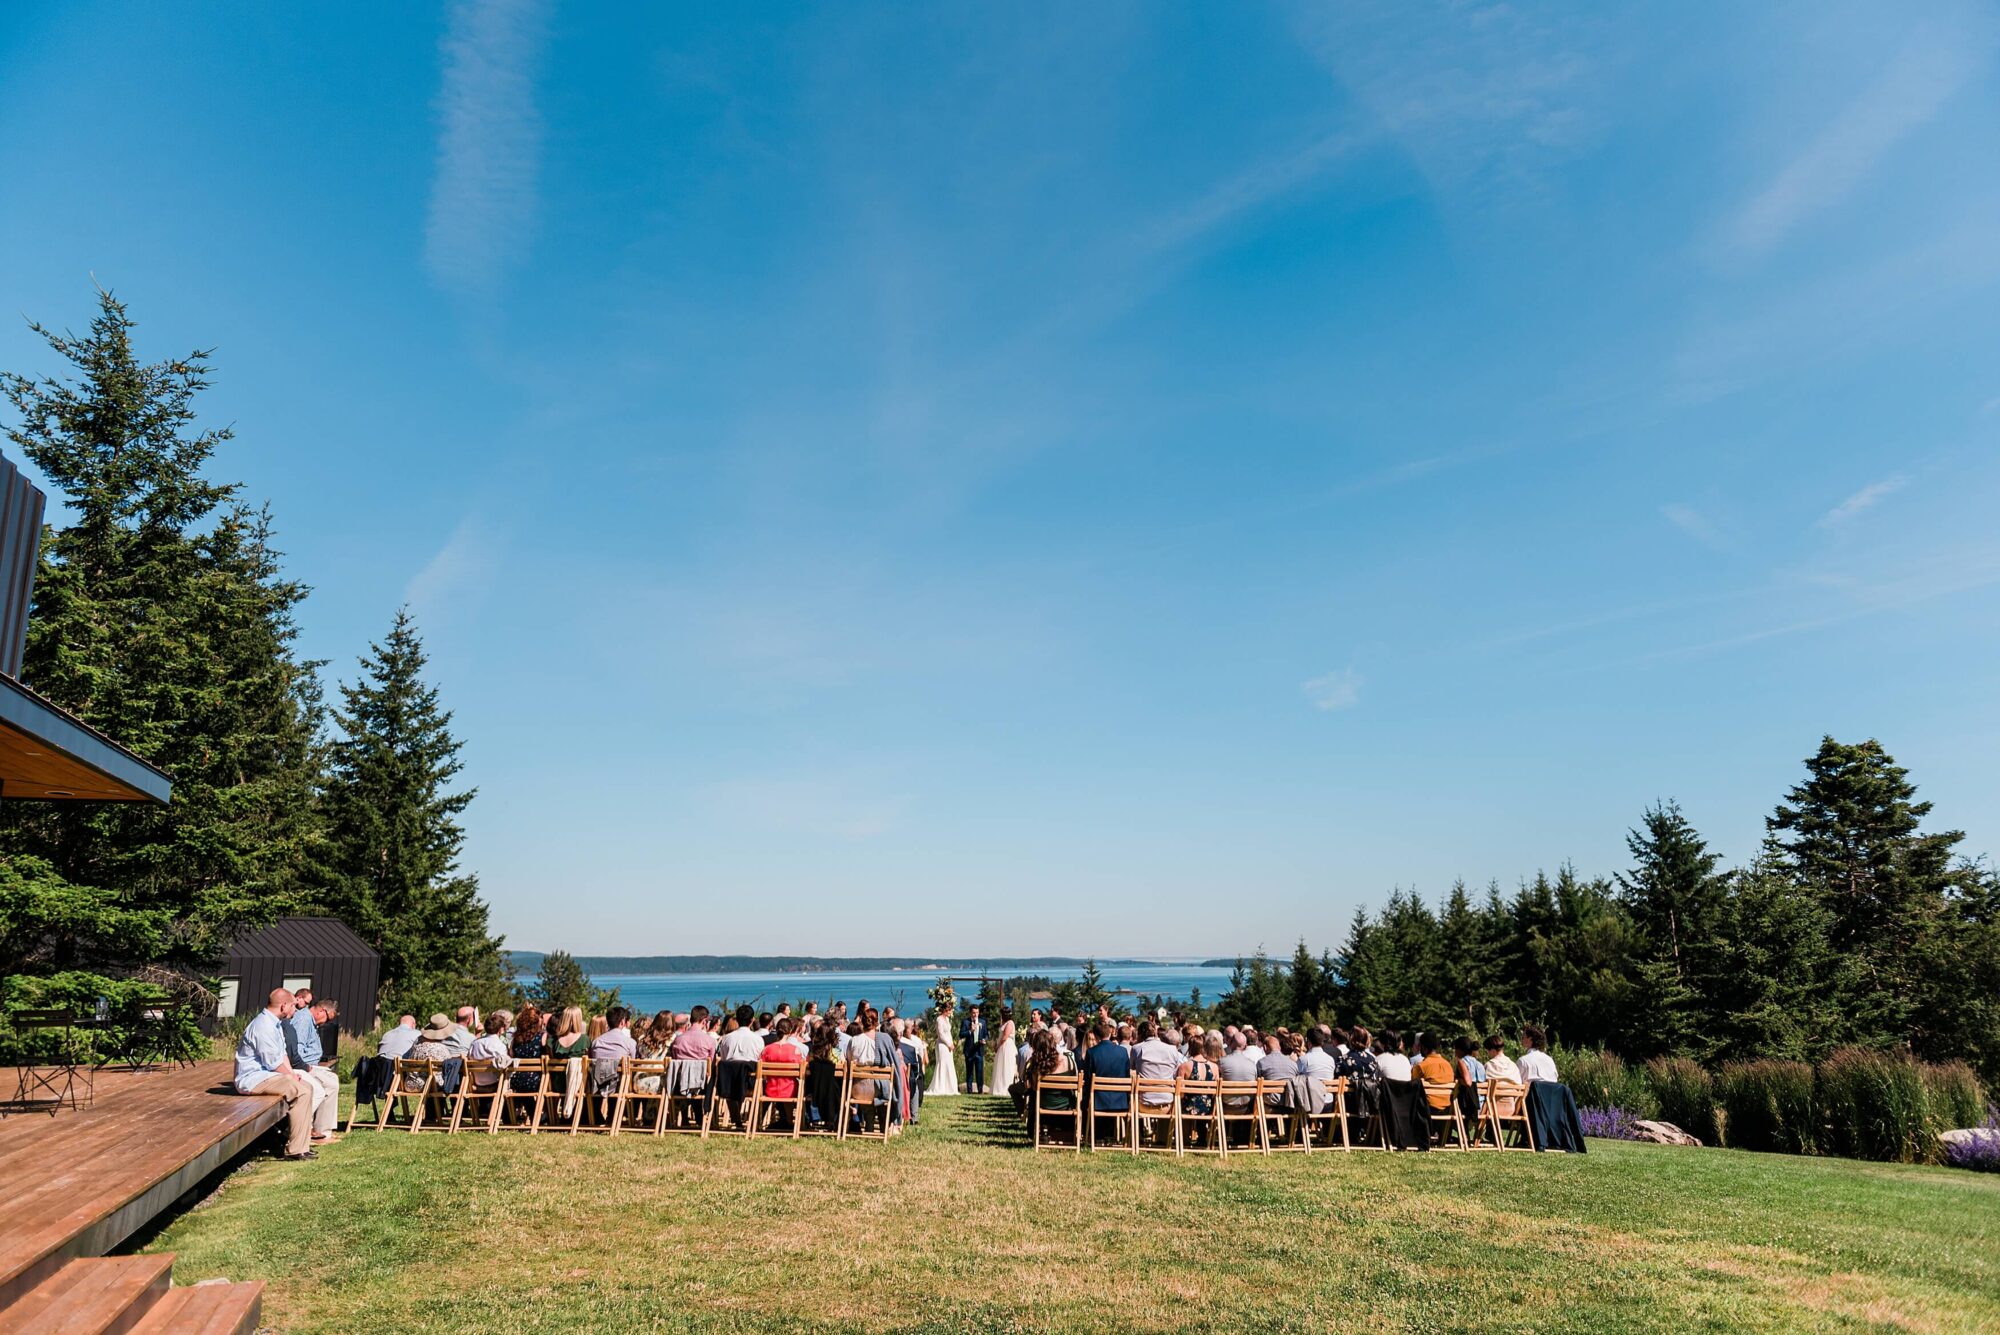 Stunning summer LGTBQ+ wedding ceremony at Saltwater Farm on San Juan Island